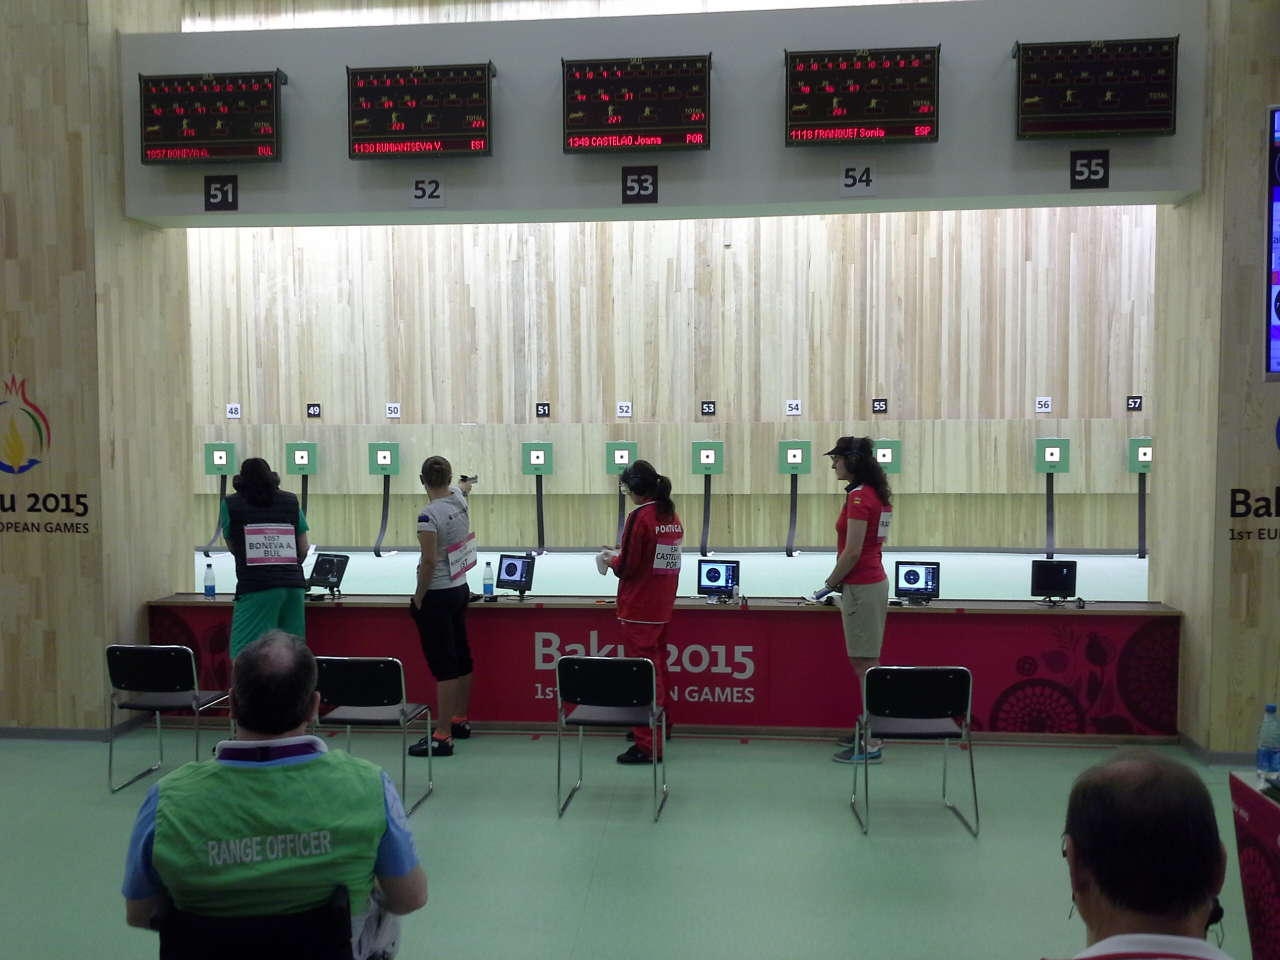 Baku 2015: Shooting competitions start (PHOTO)